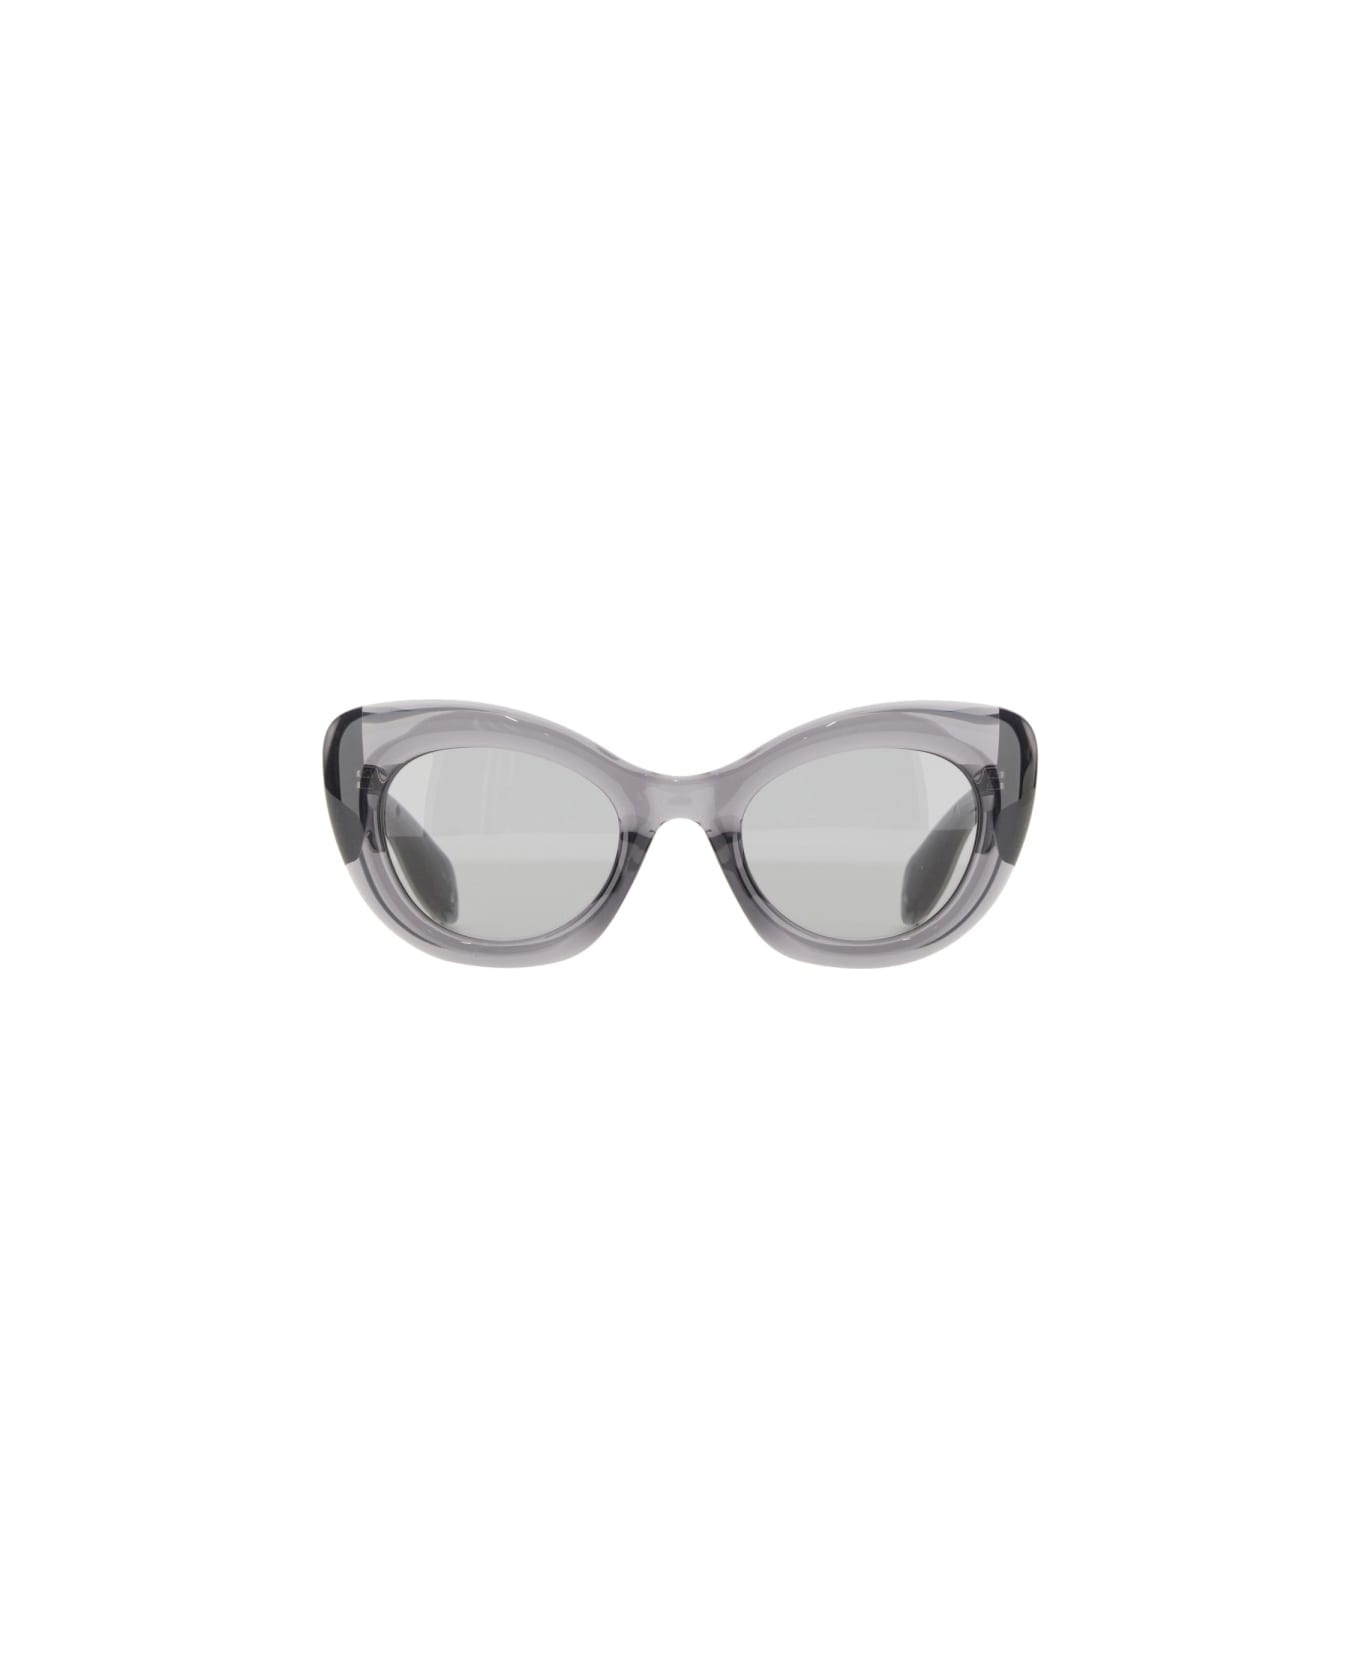 Alexander McQueen Cat-eye Sunglasses The Curve - GREY